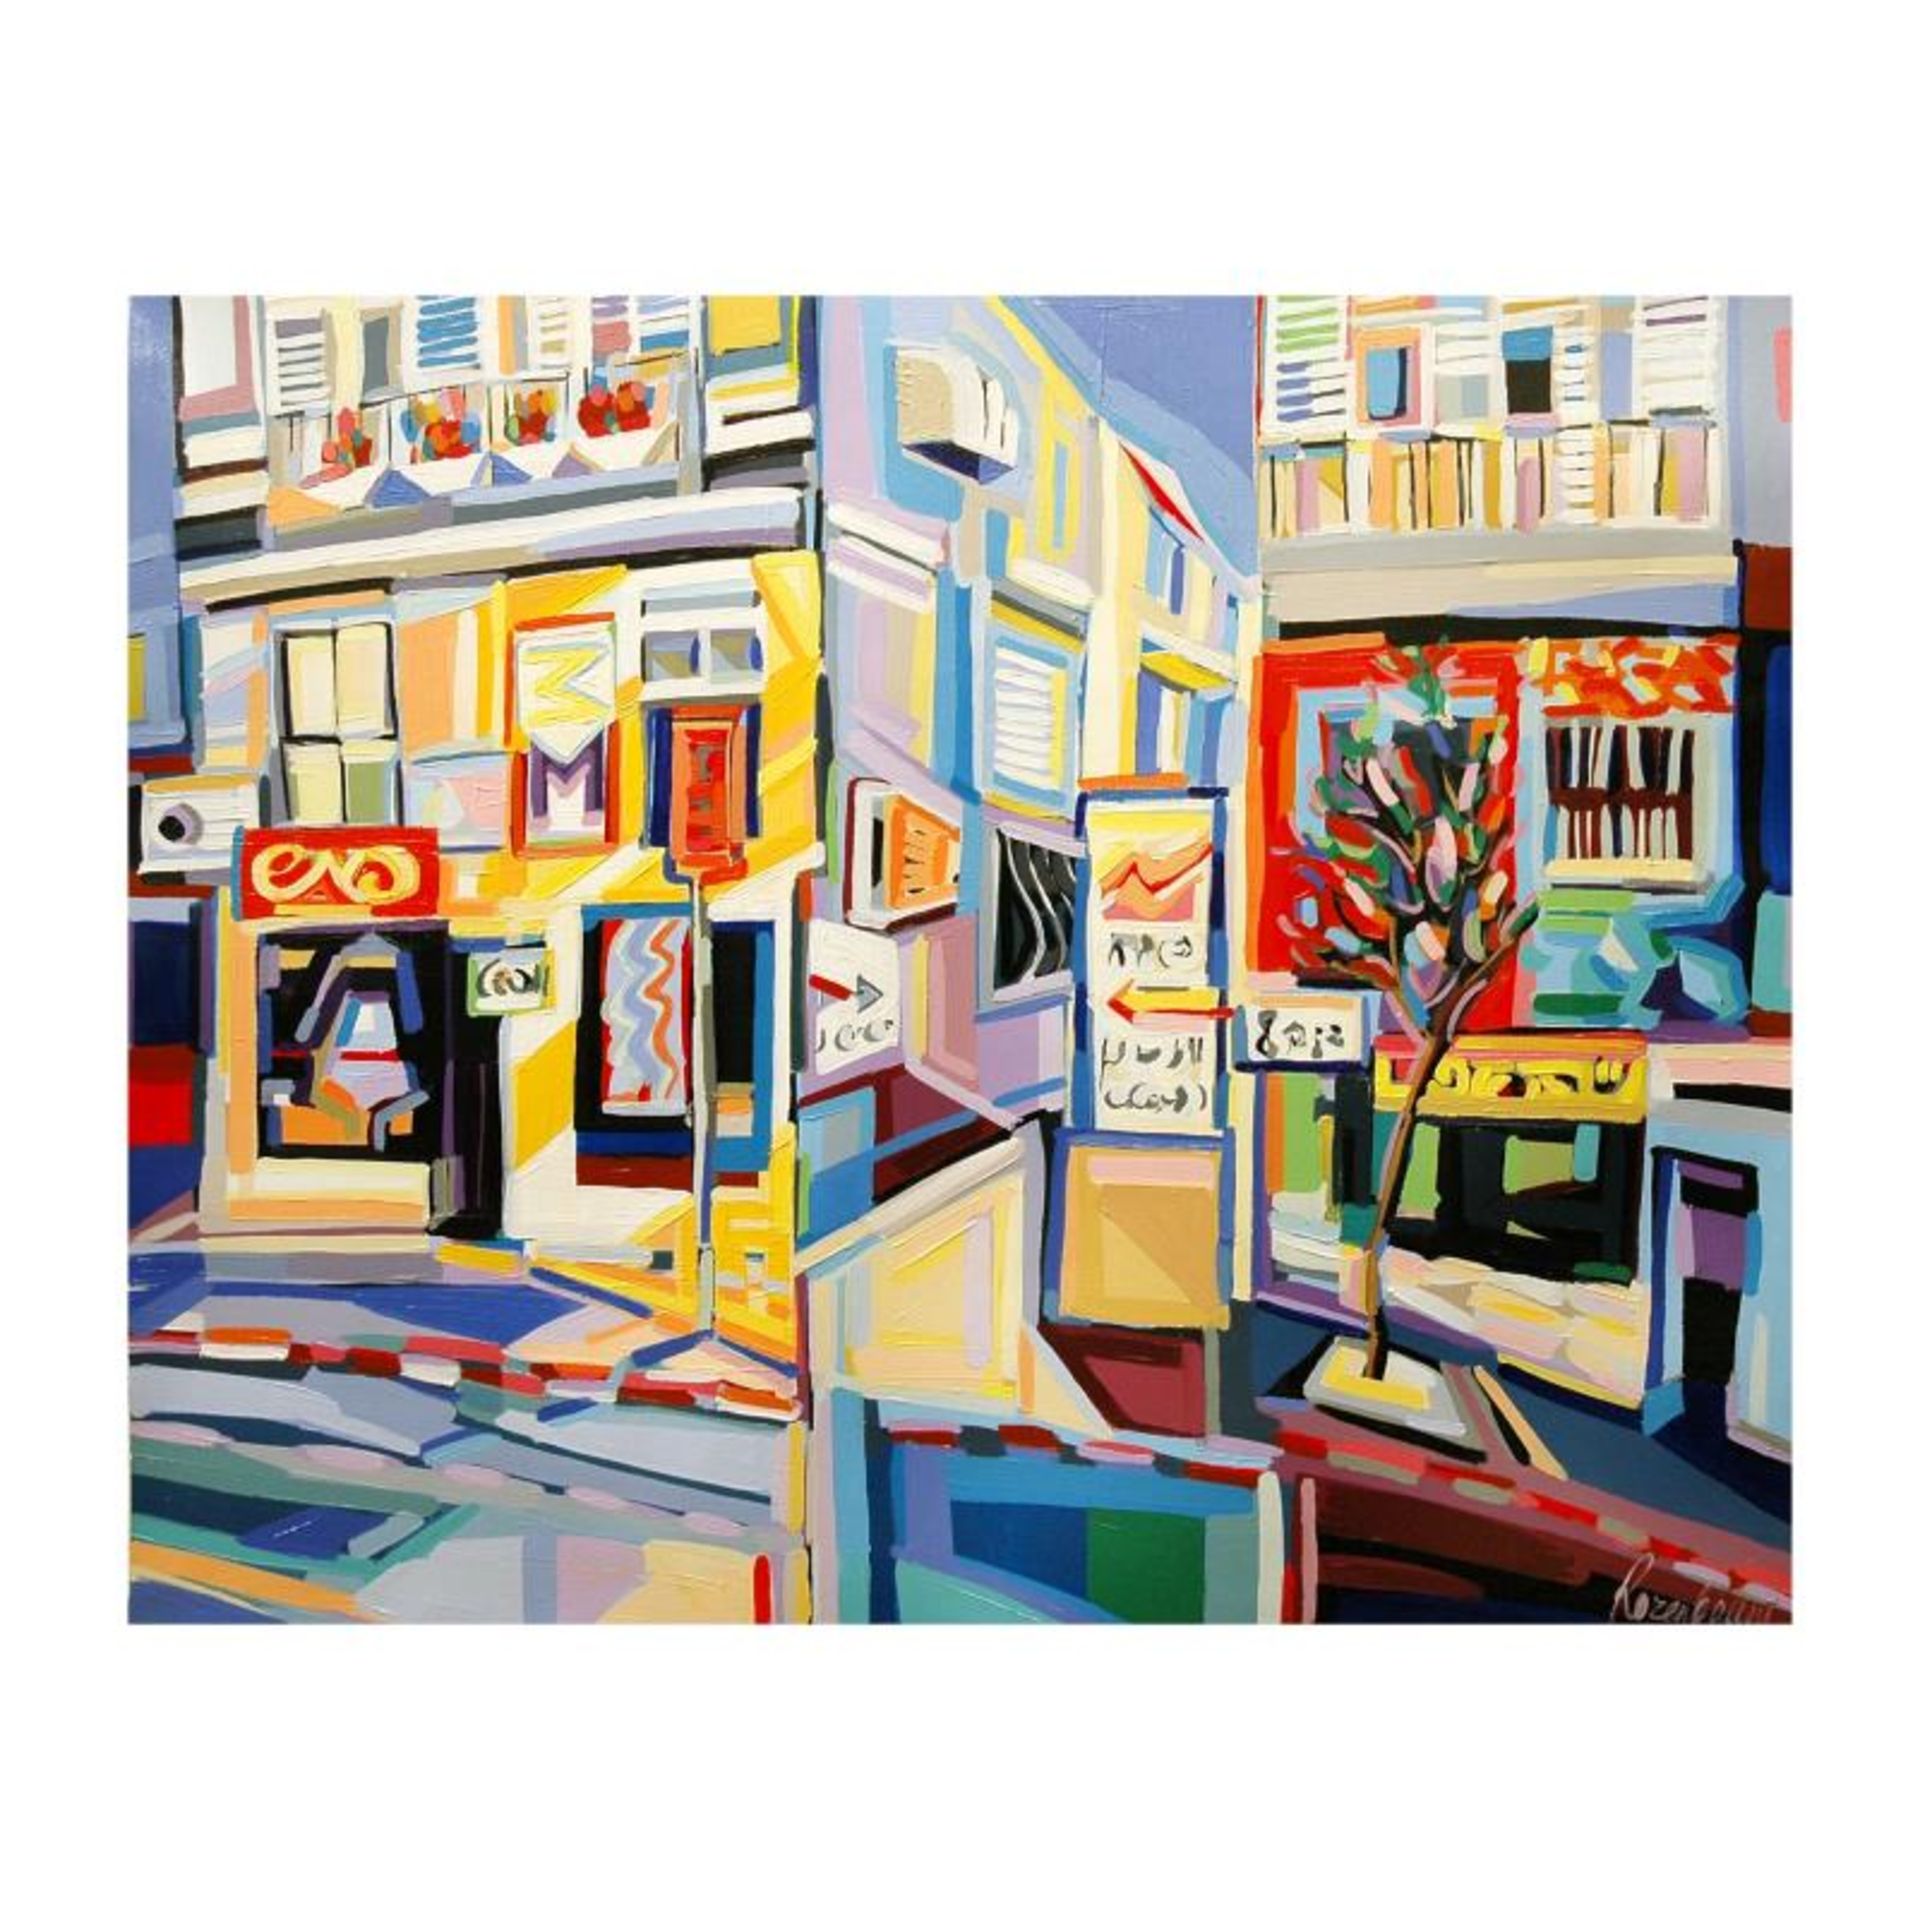 Natalie Rozenbaum, "Corner At Bugrashov" Limited Edition on Canvas, Numbered and